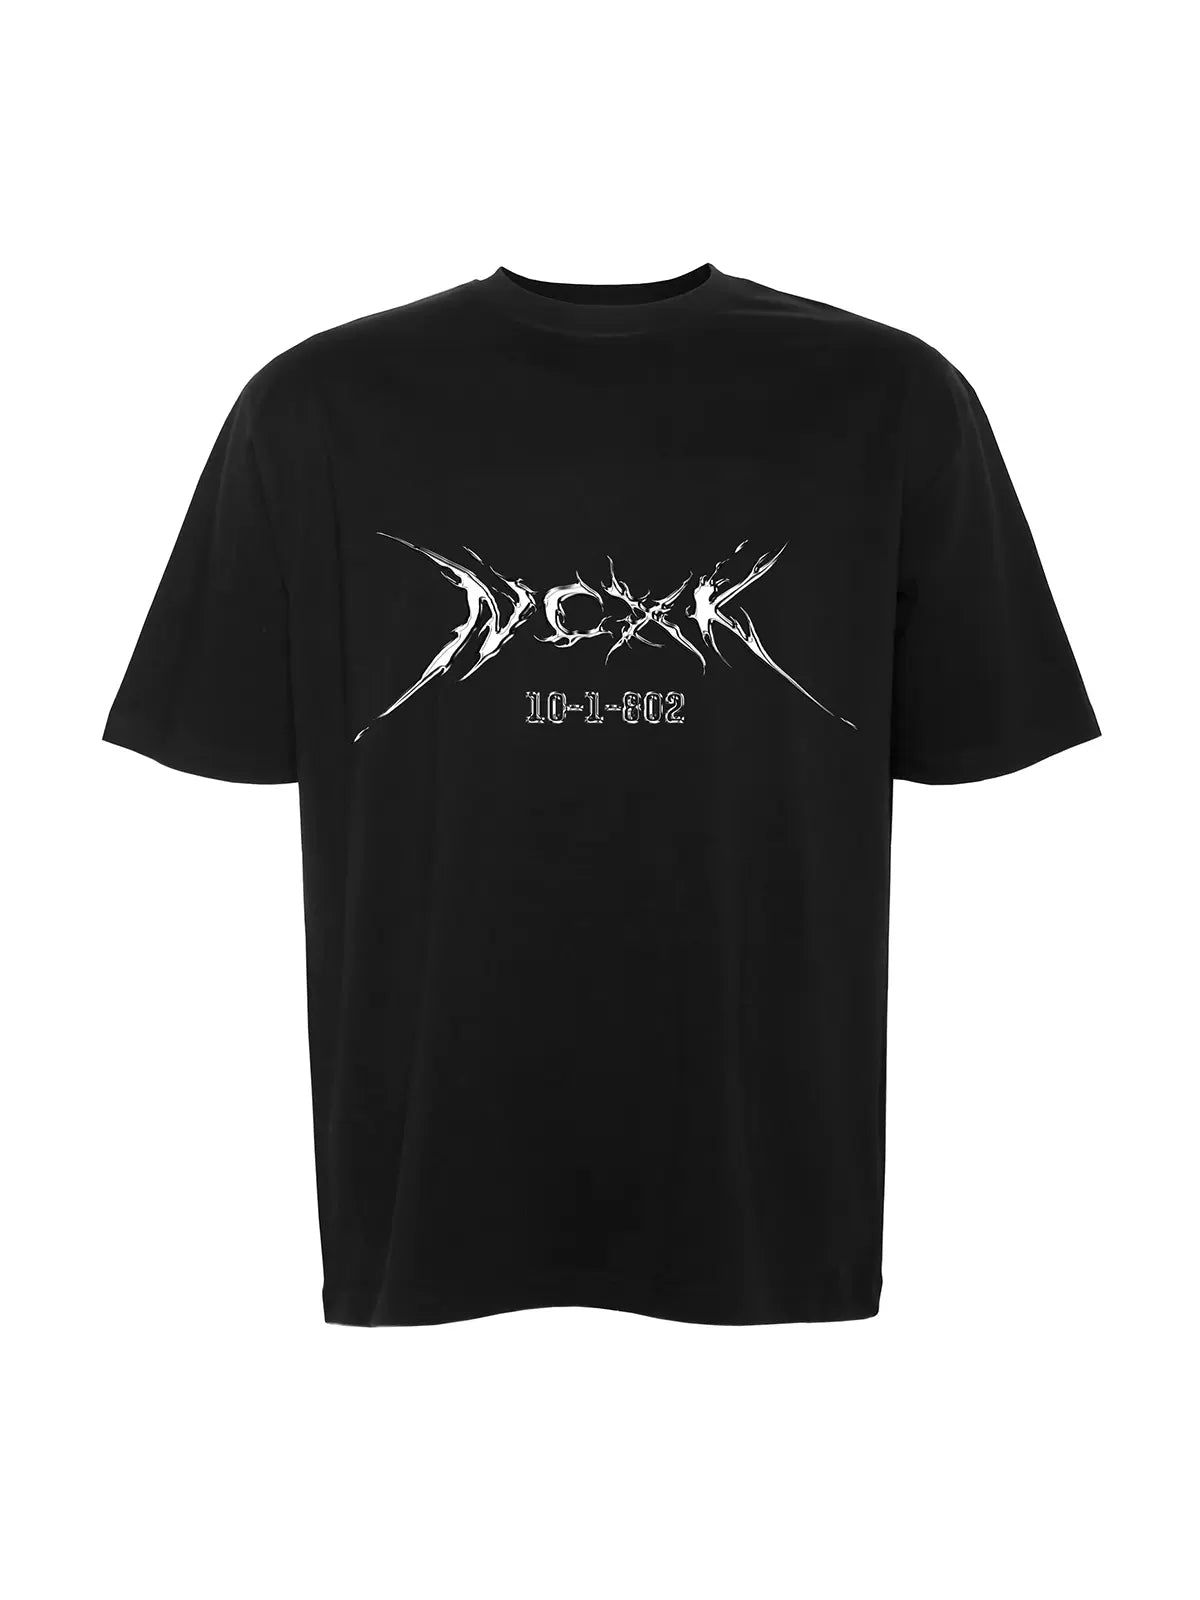 Basic Metallic Print T-Shirt Korean Street Fashion T-Shirt By Poikilotherm Shop Online at OH Vault